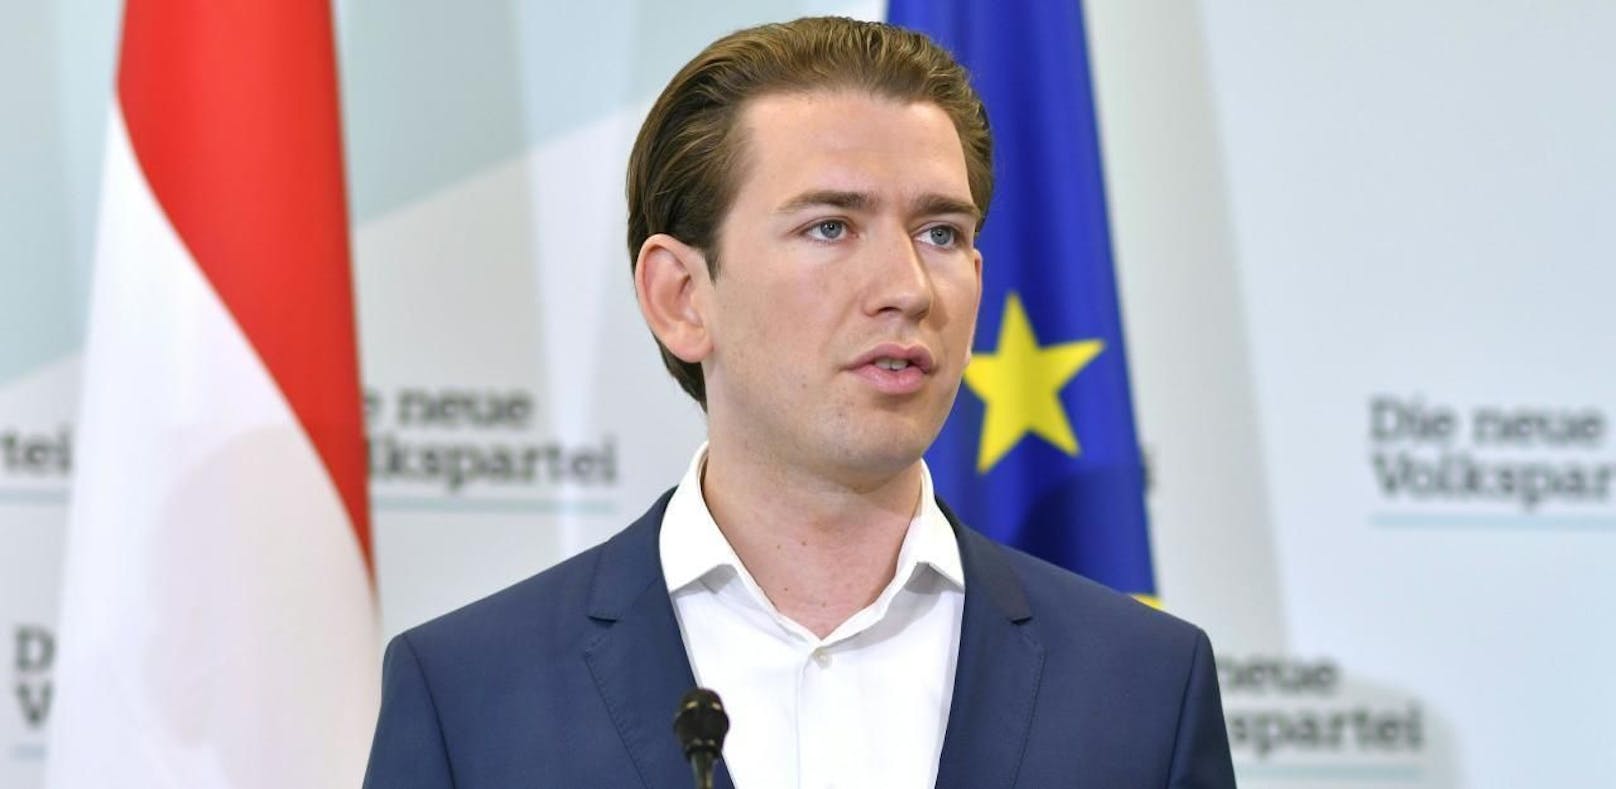 ÖVP-Chef Sebastian Kurz